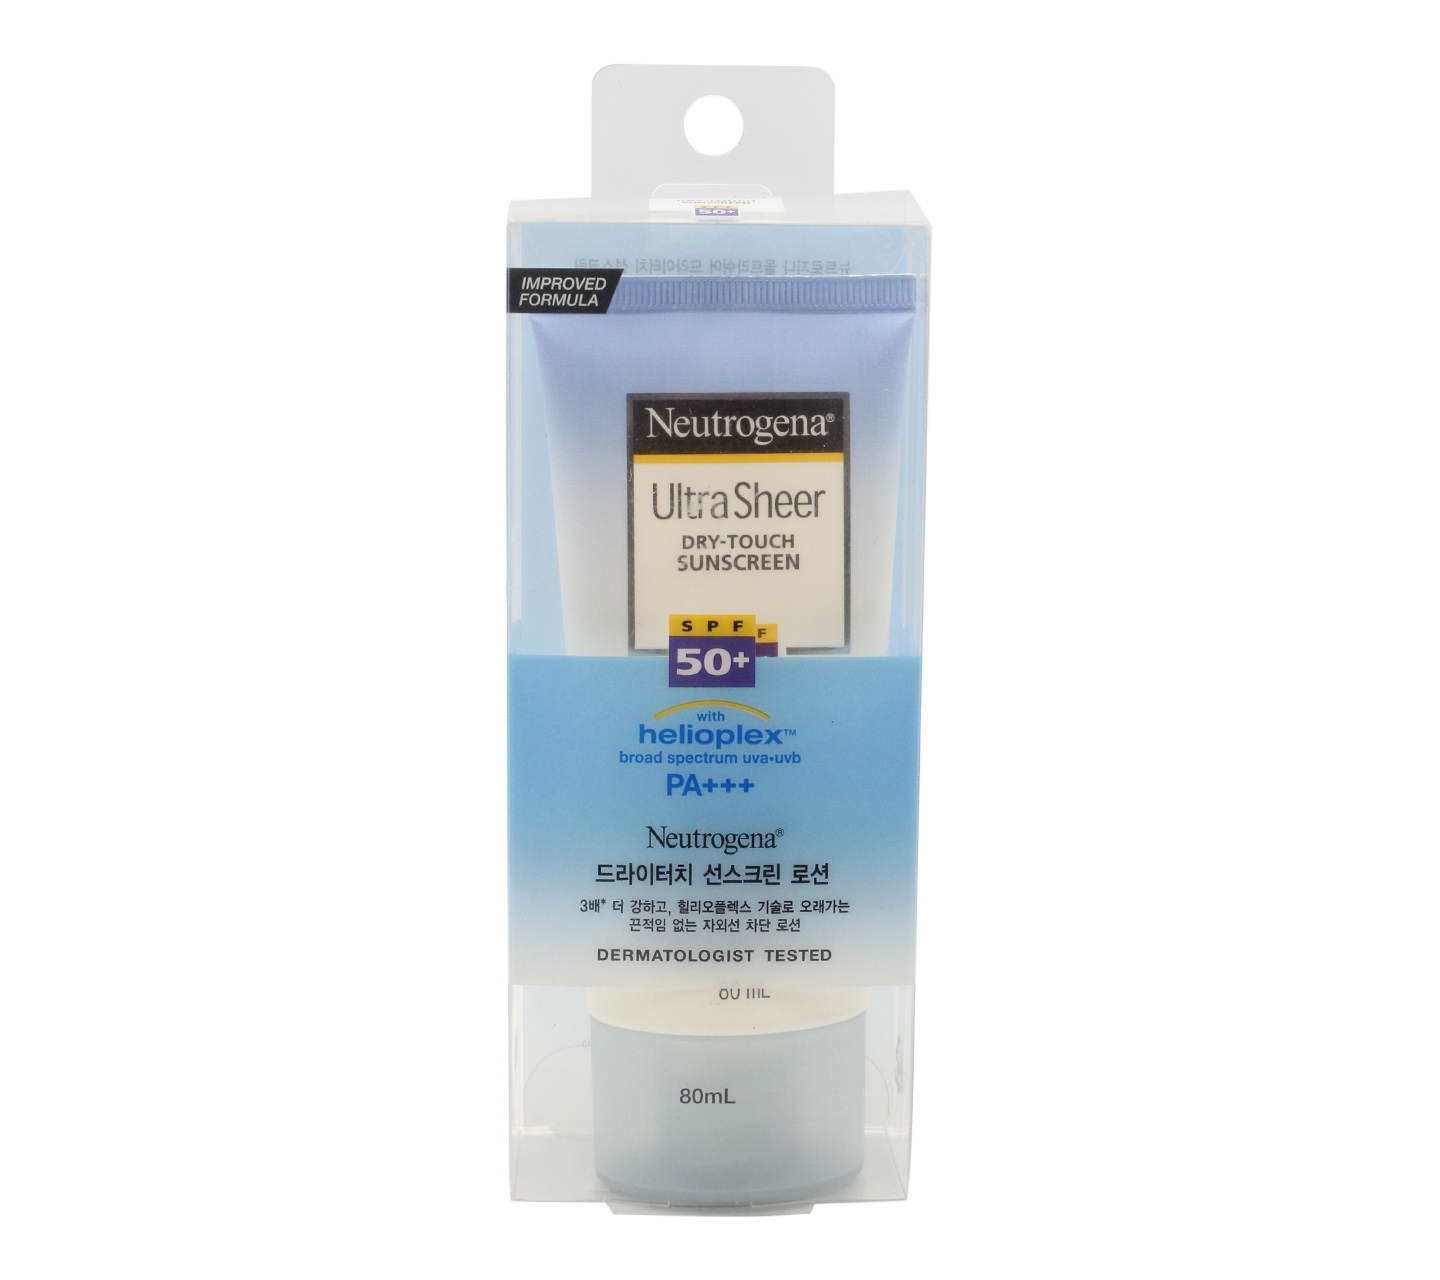 Neutrogena Ultra Sheer Dry-Touch Sunscreen Skin Care